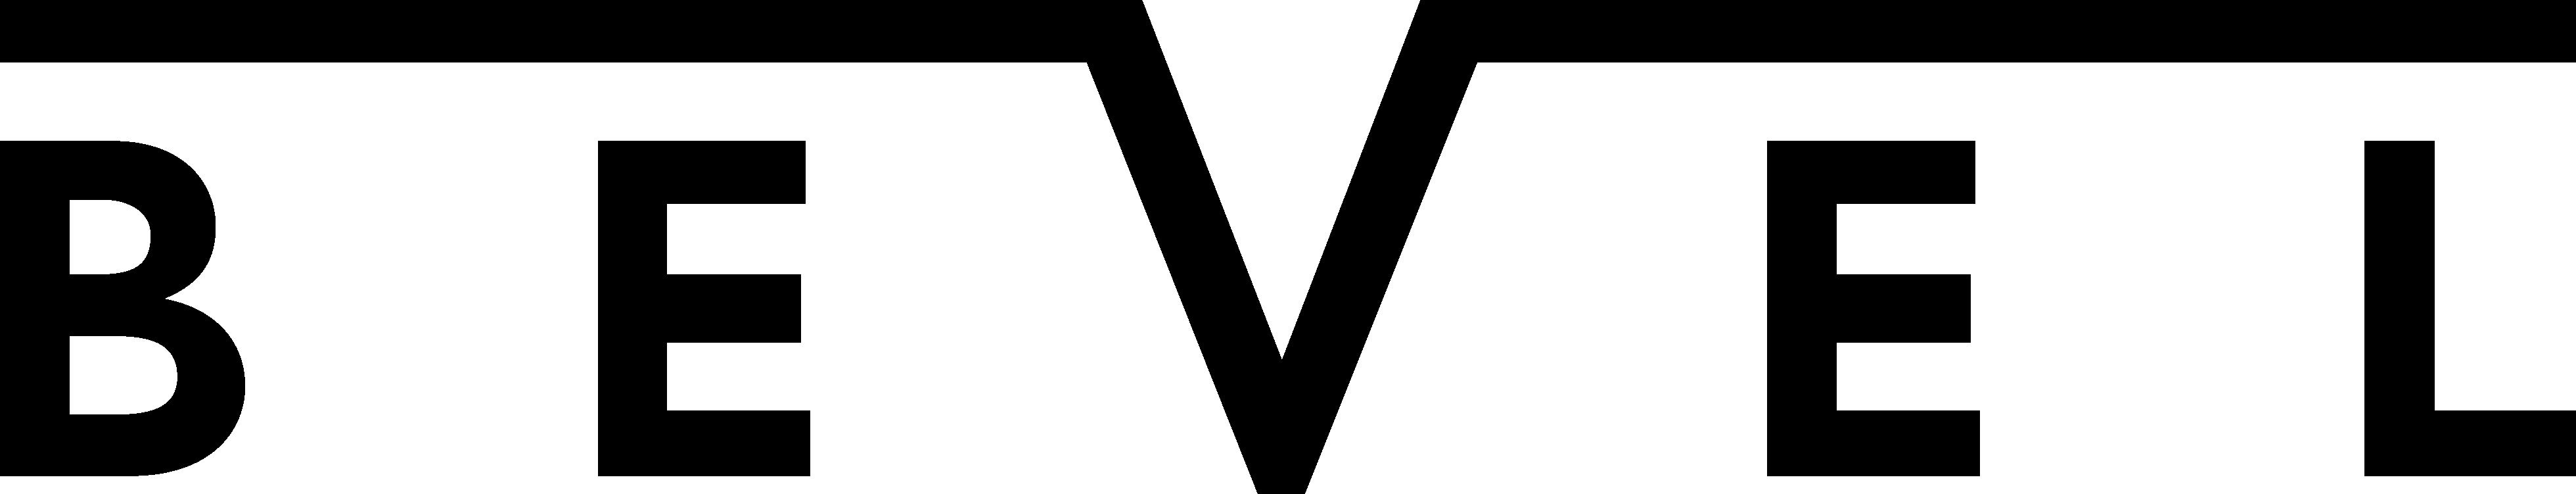 Bevel logo